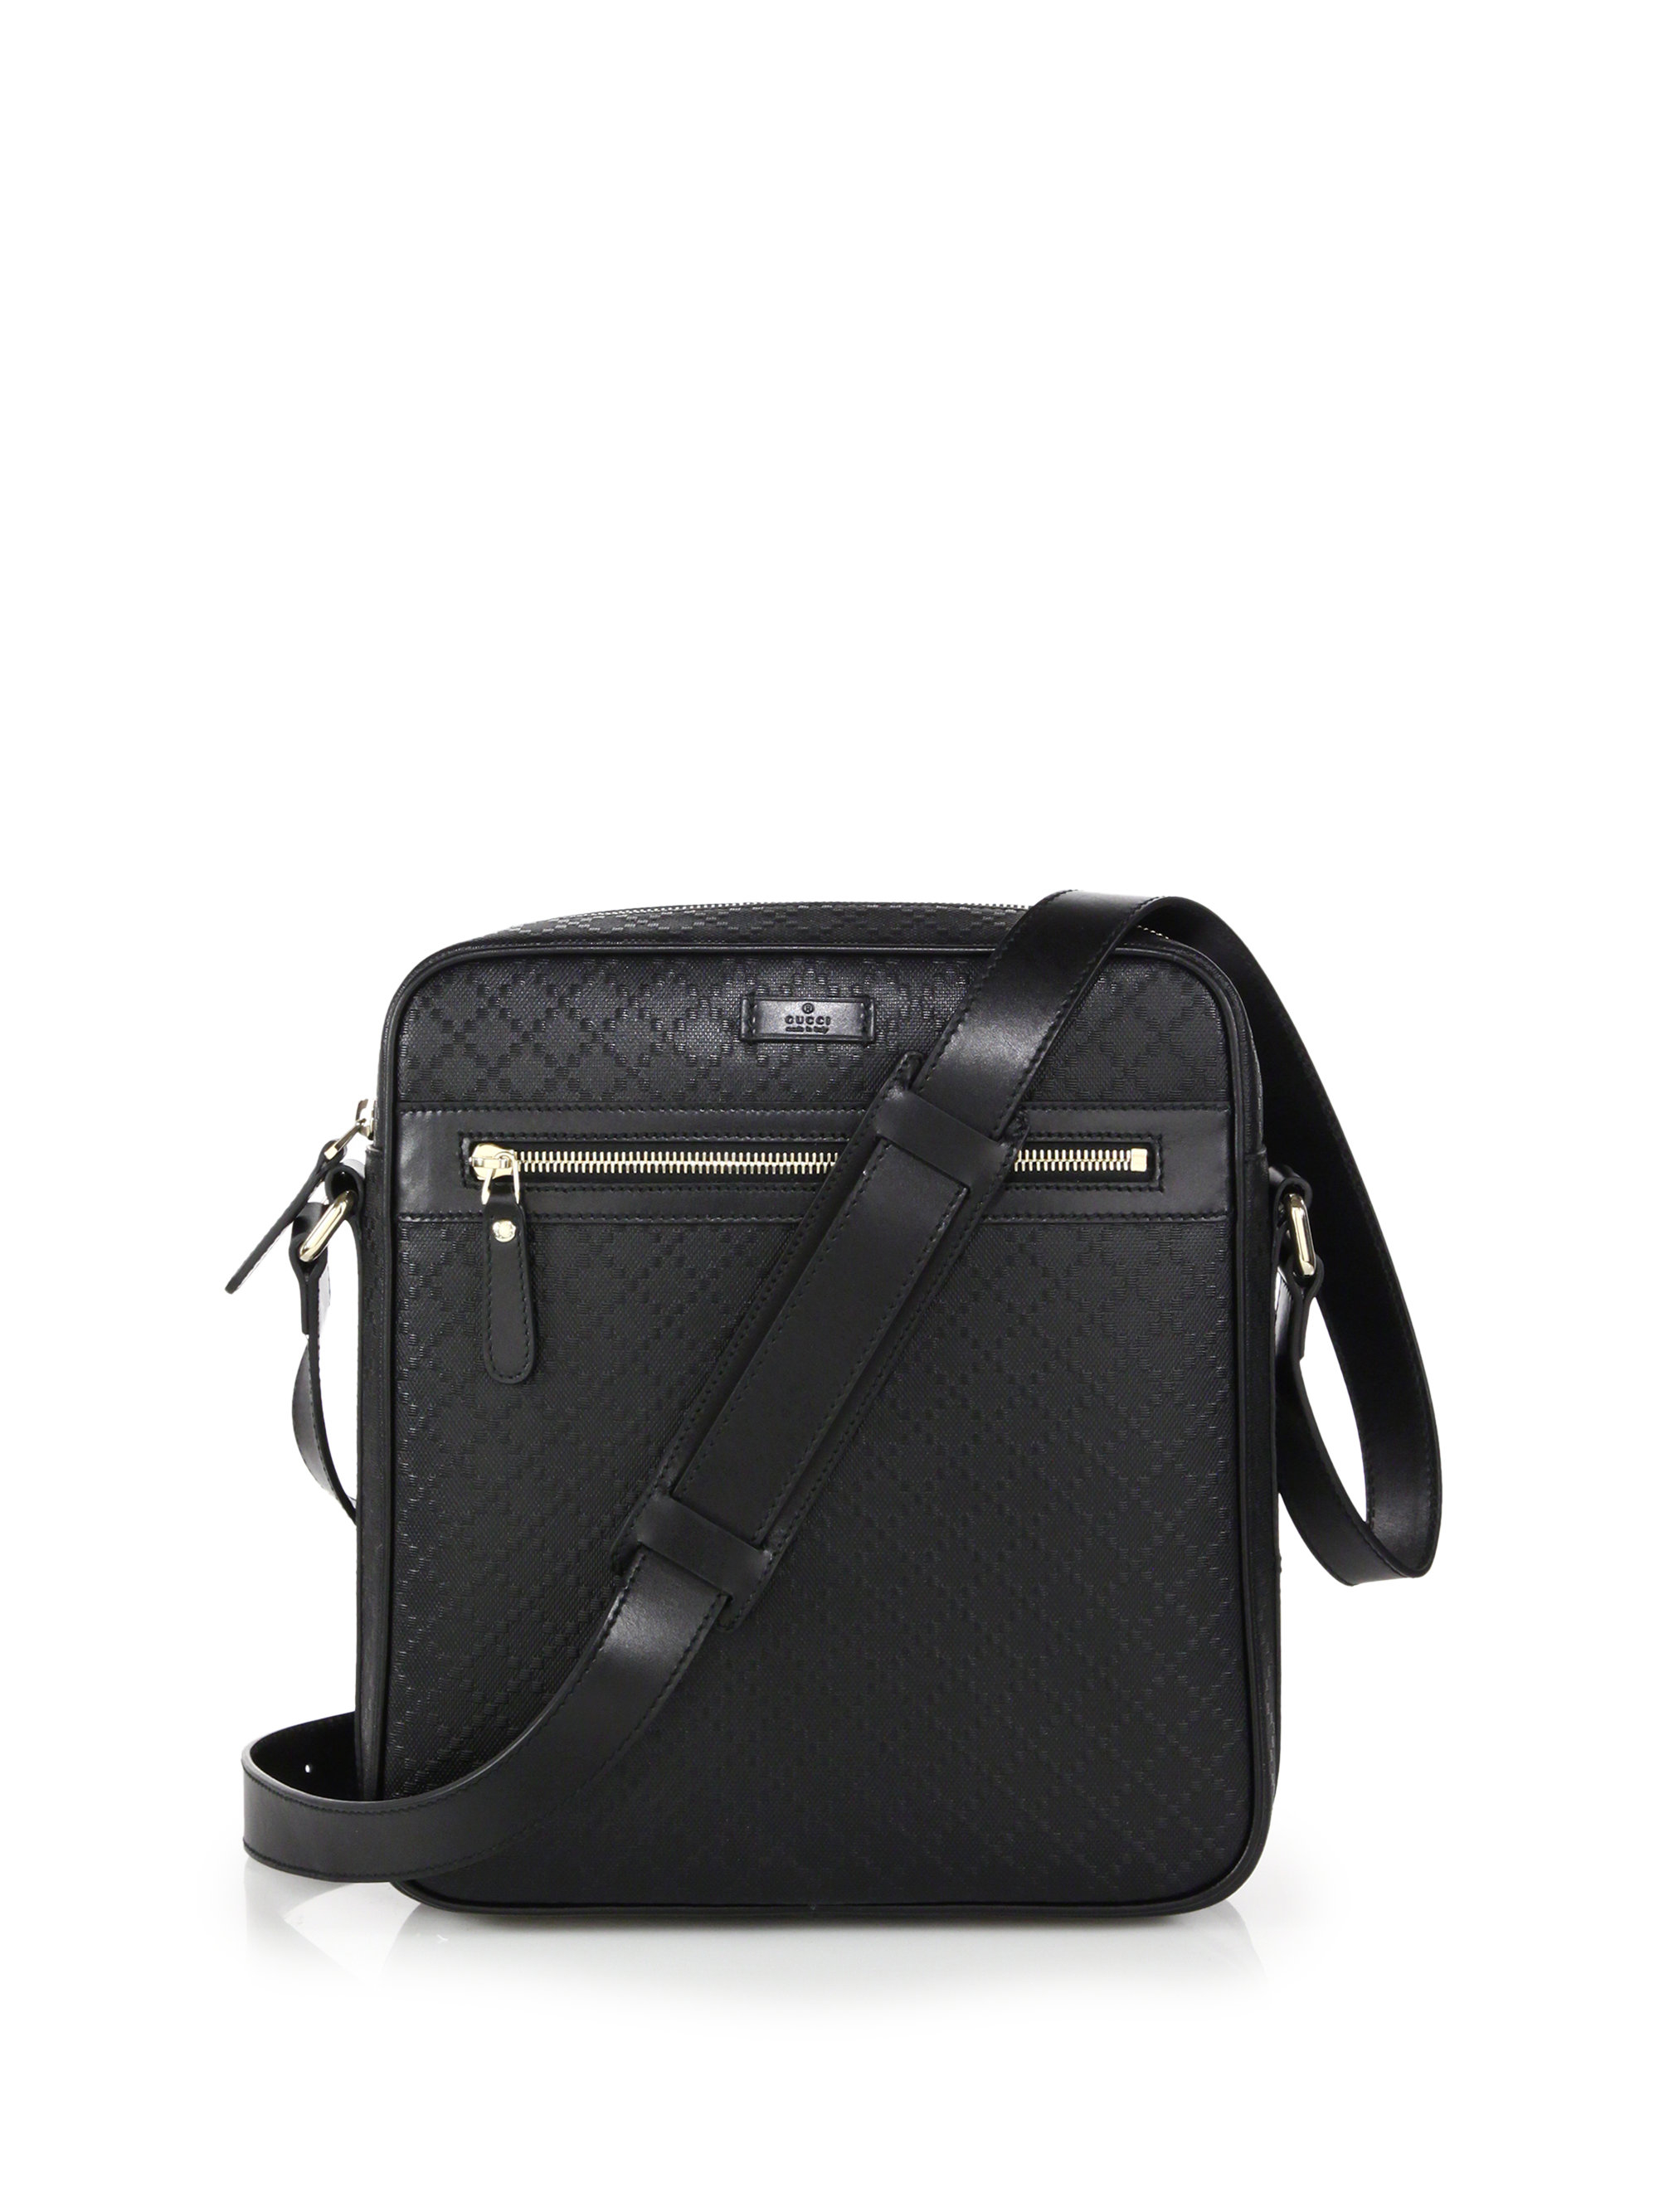 Gucci Bright Diamante Leather Shoulder Bag in Black for Men - Lyst